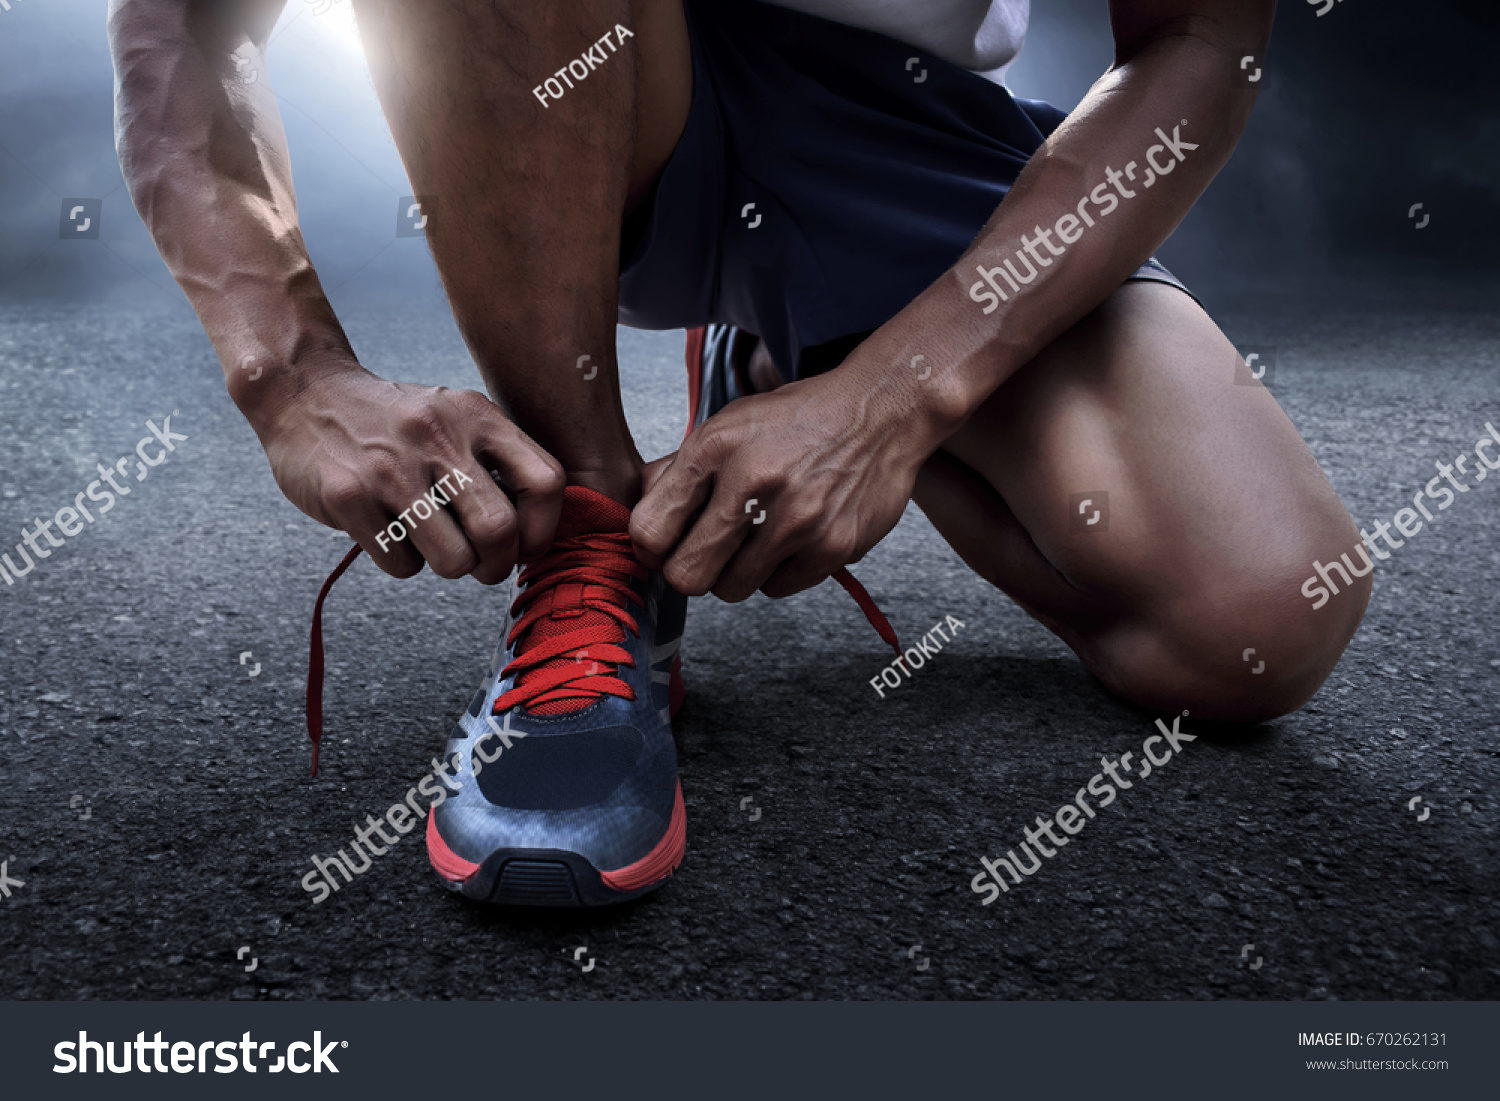 Man tying running shoes #670262131